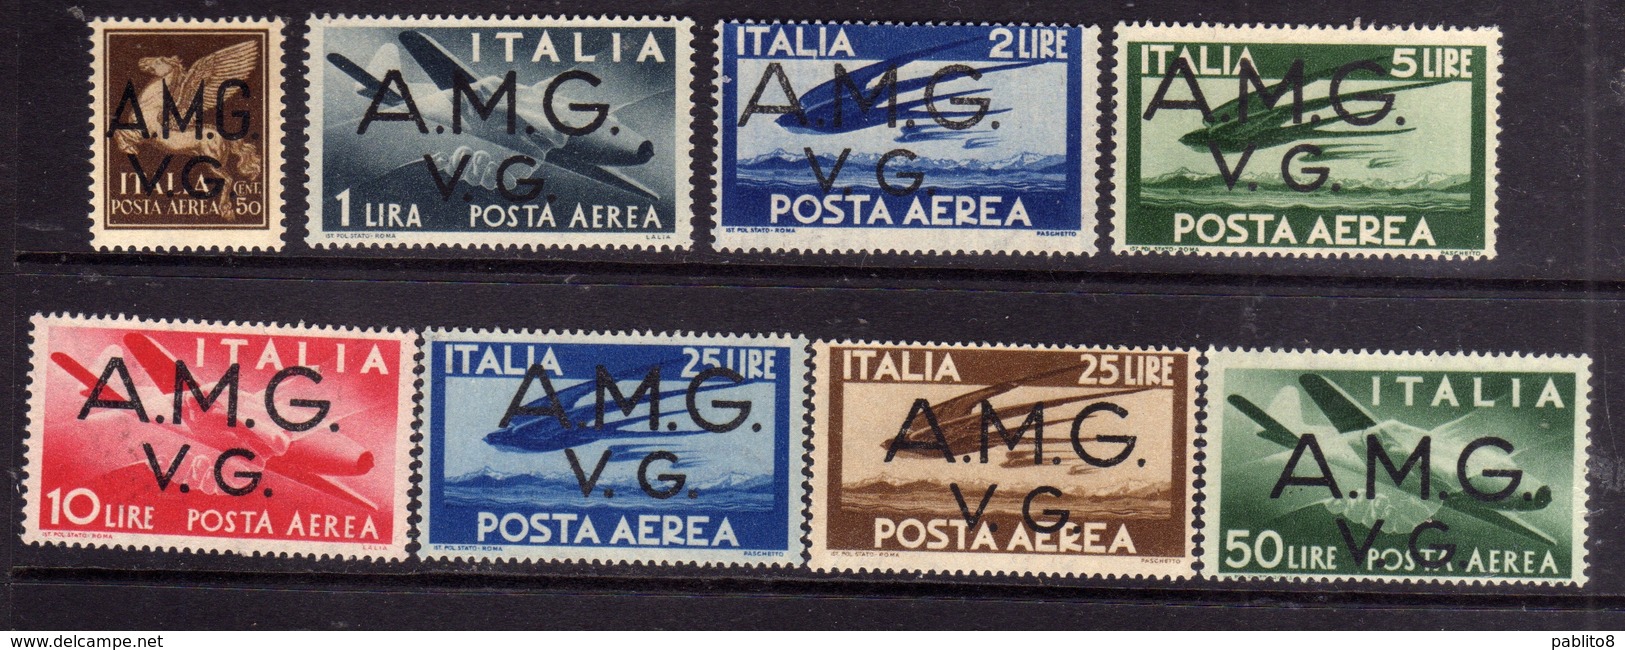 VENEZIA GIULIA 1945 - 1947 TRIESTE AMG VG POSTA AEREA AIR MAIL SERIE COMPLETA COMPLETE SET MNH - Revenue Stamps